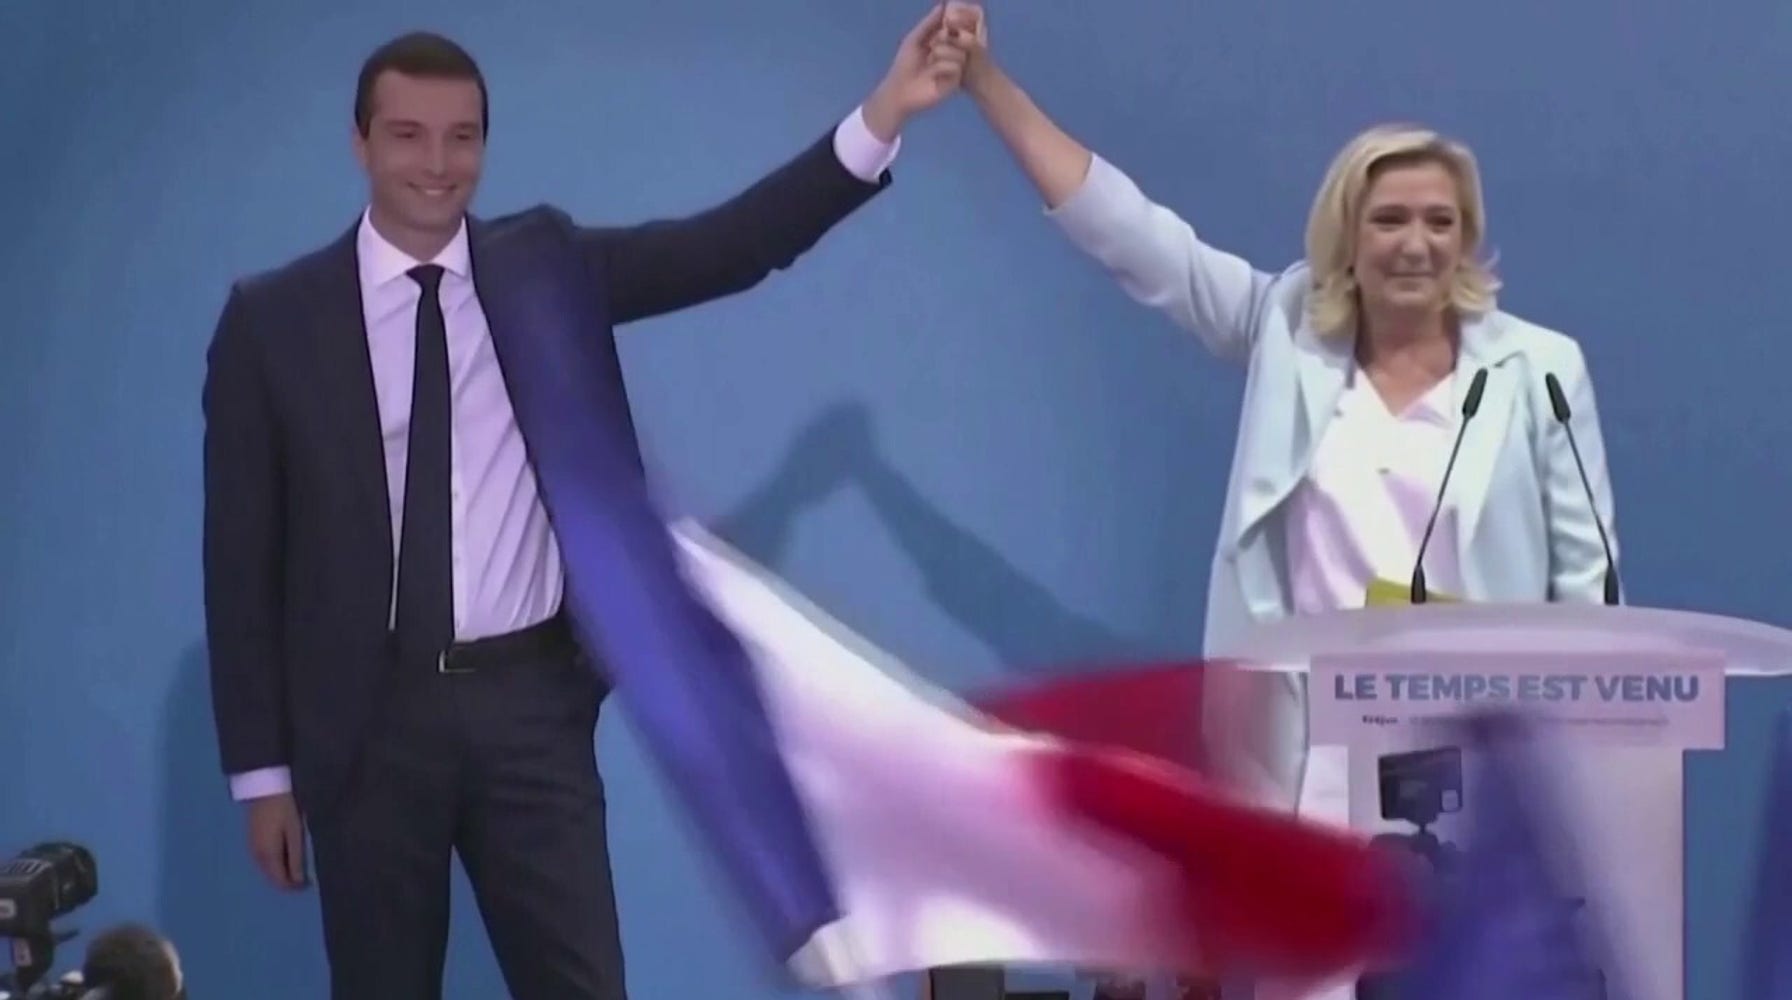 Jordan Bardella: Rising Star of French Politics and Potential Prime Minister